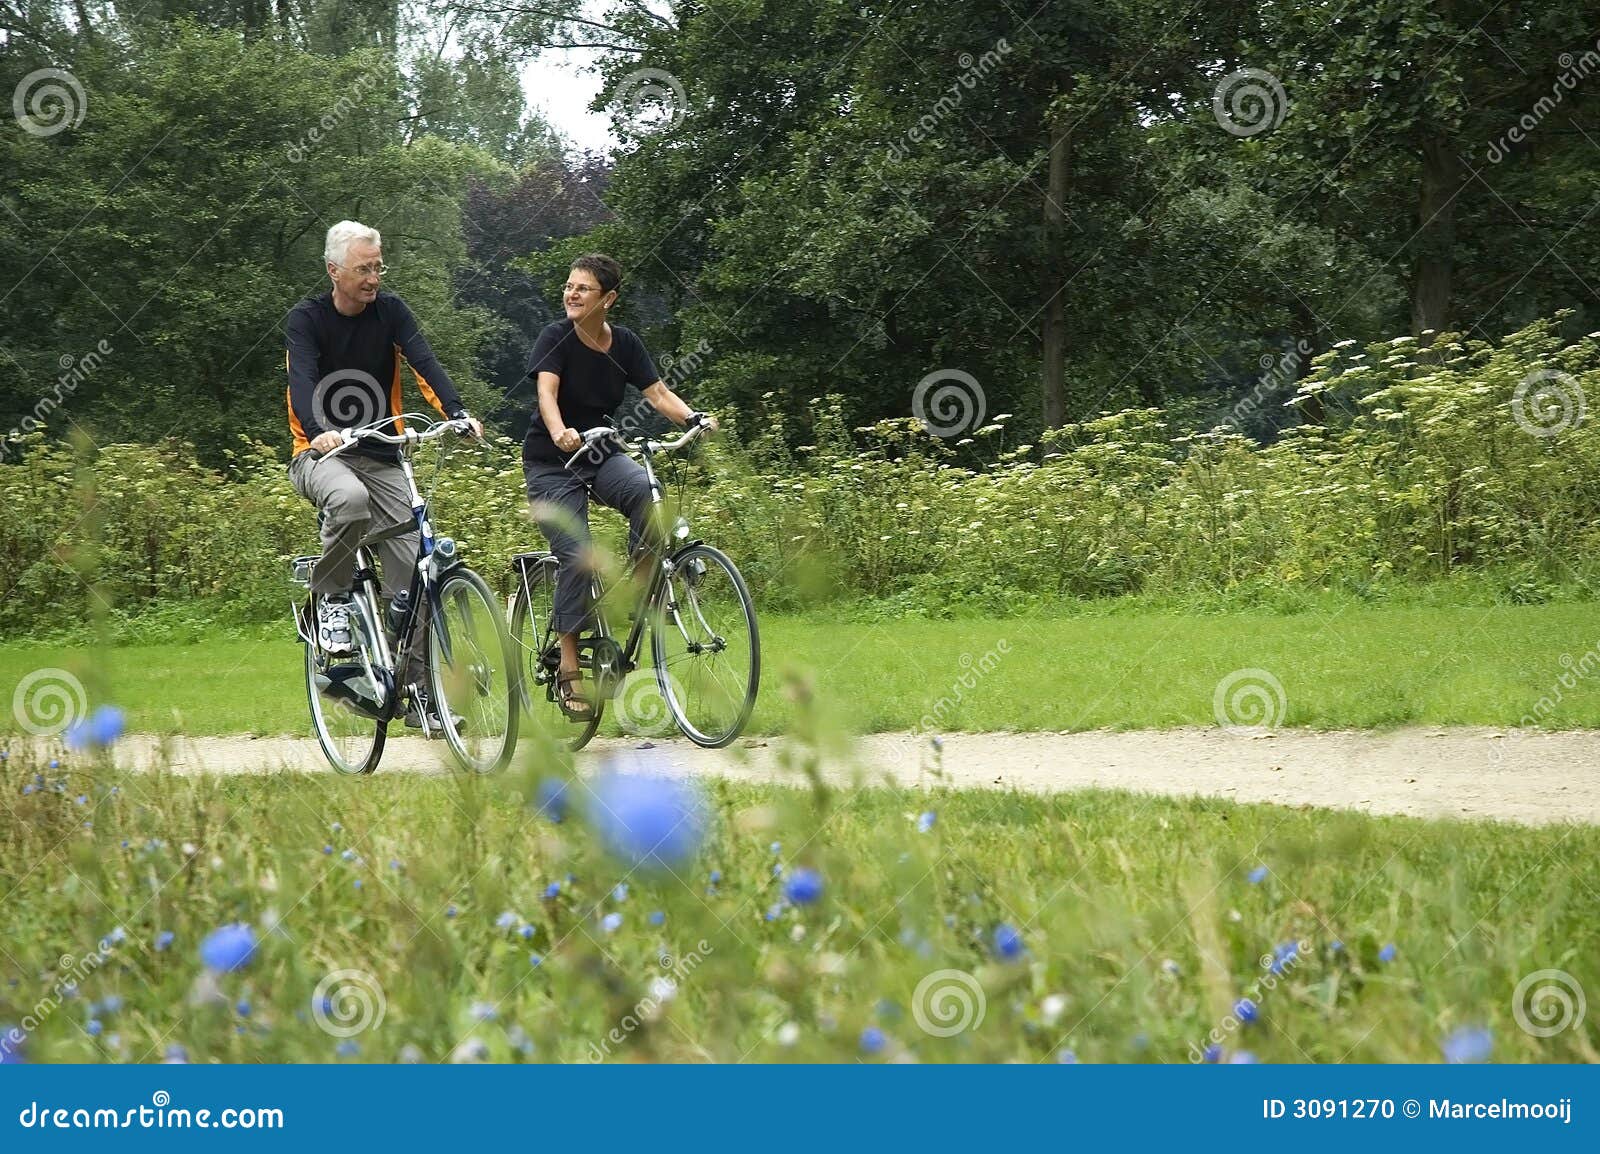 seniors biking